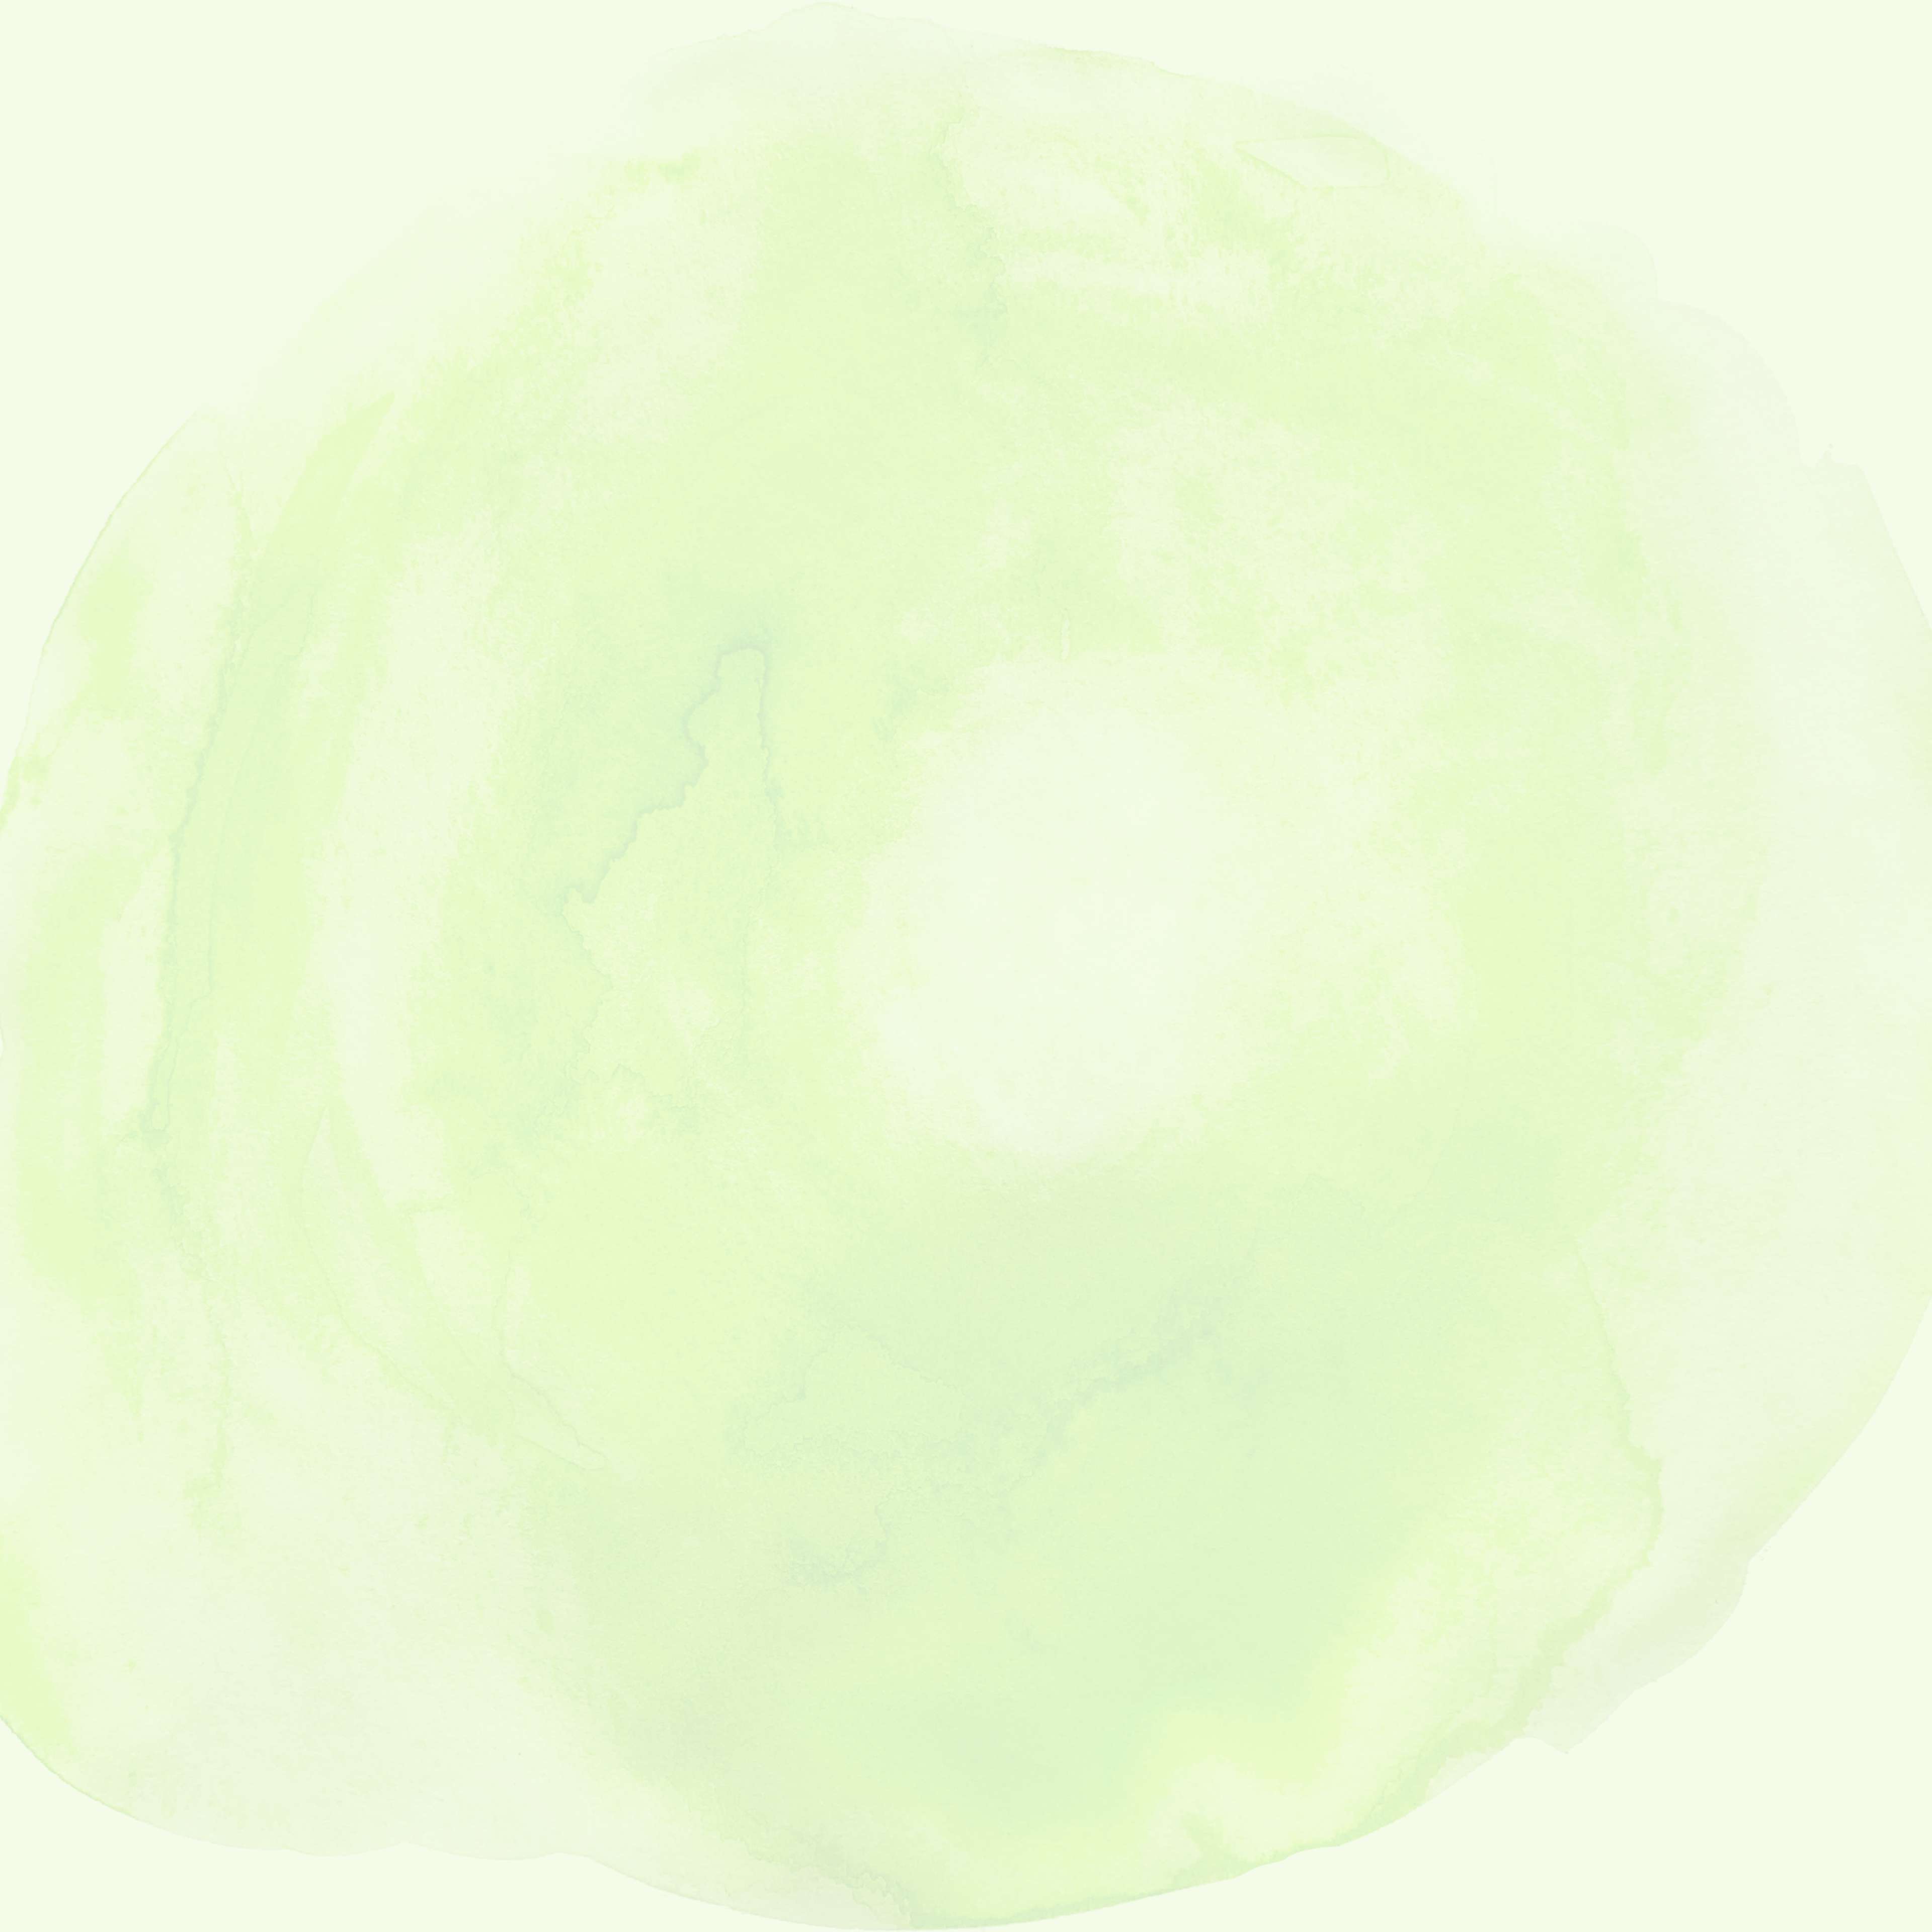 Green circular stroke watercolor illustration